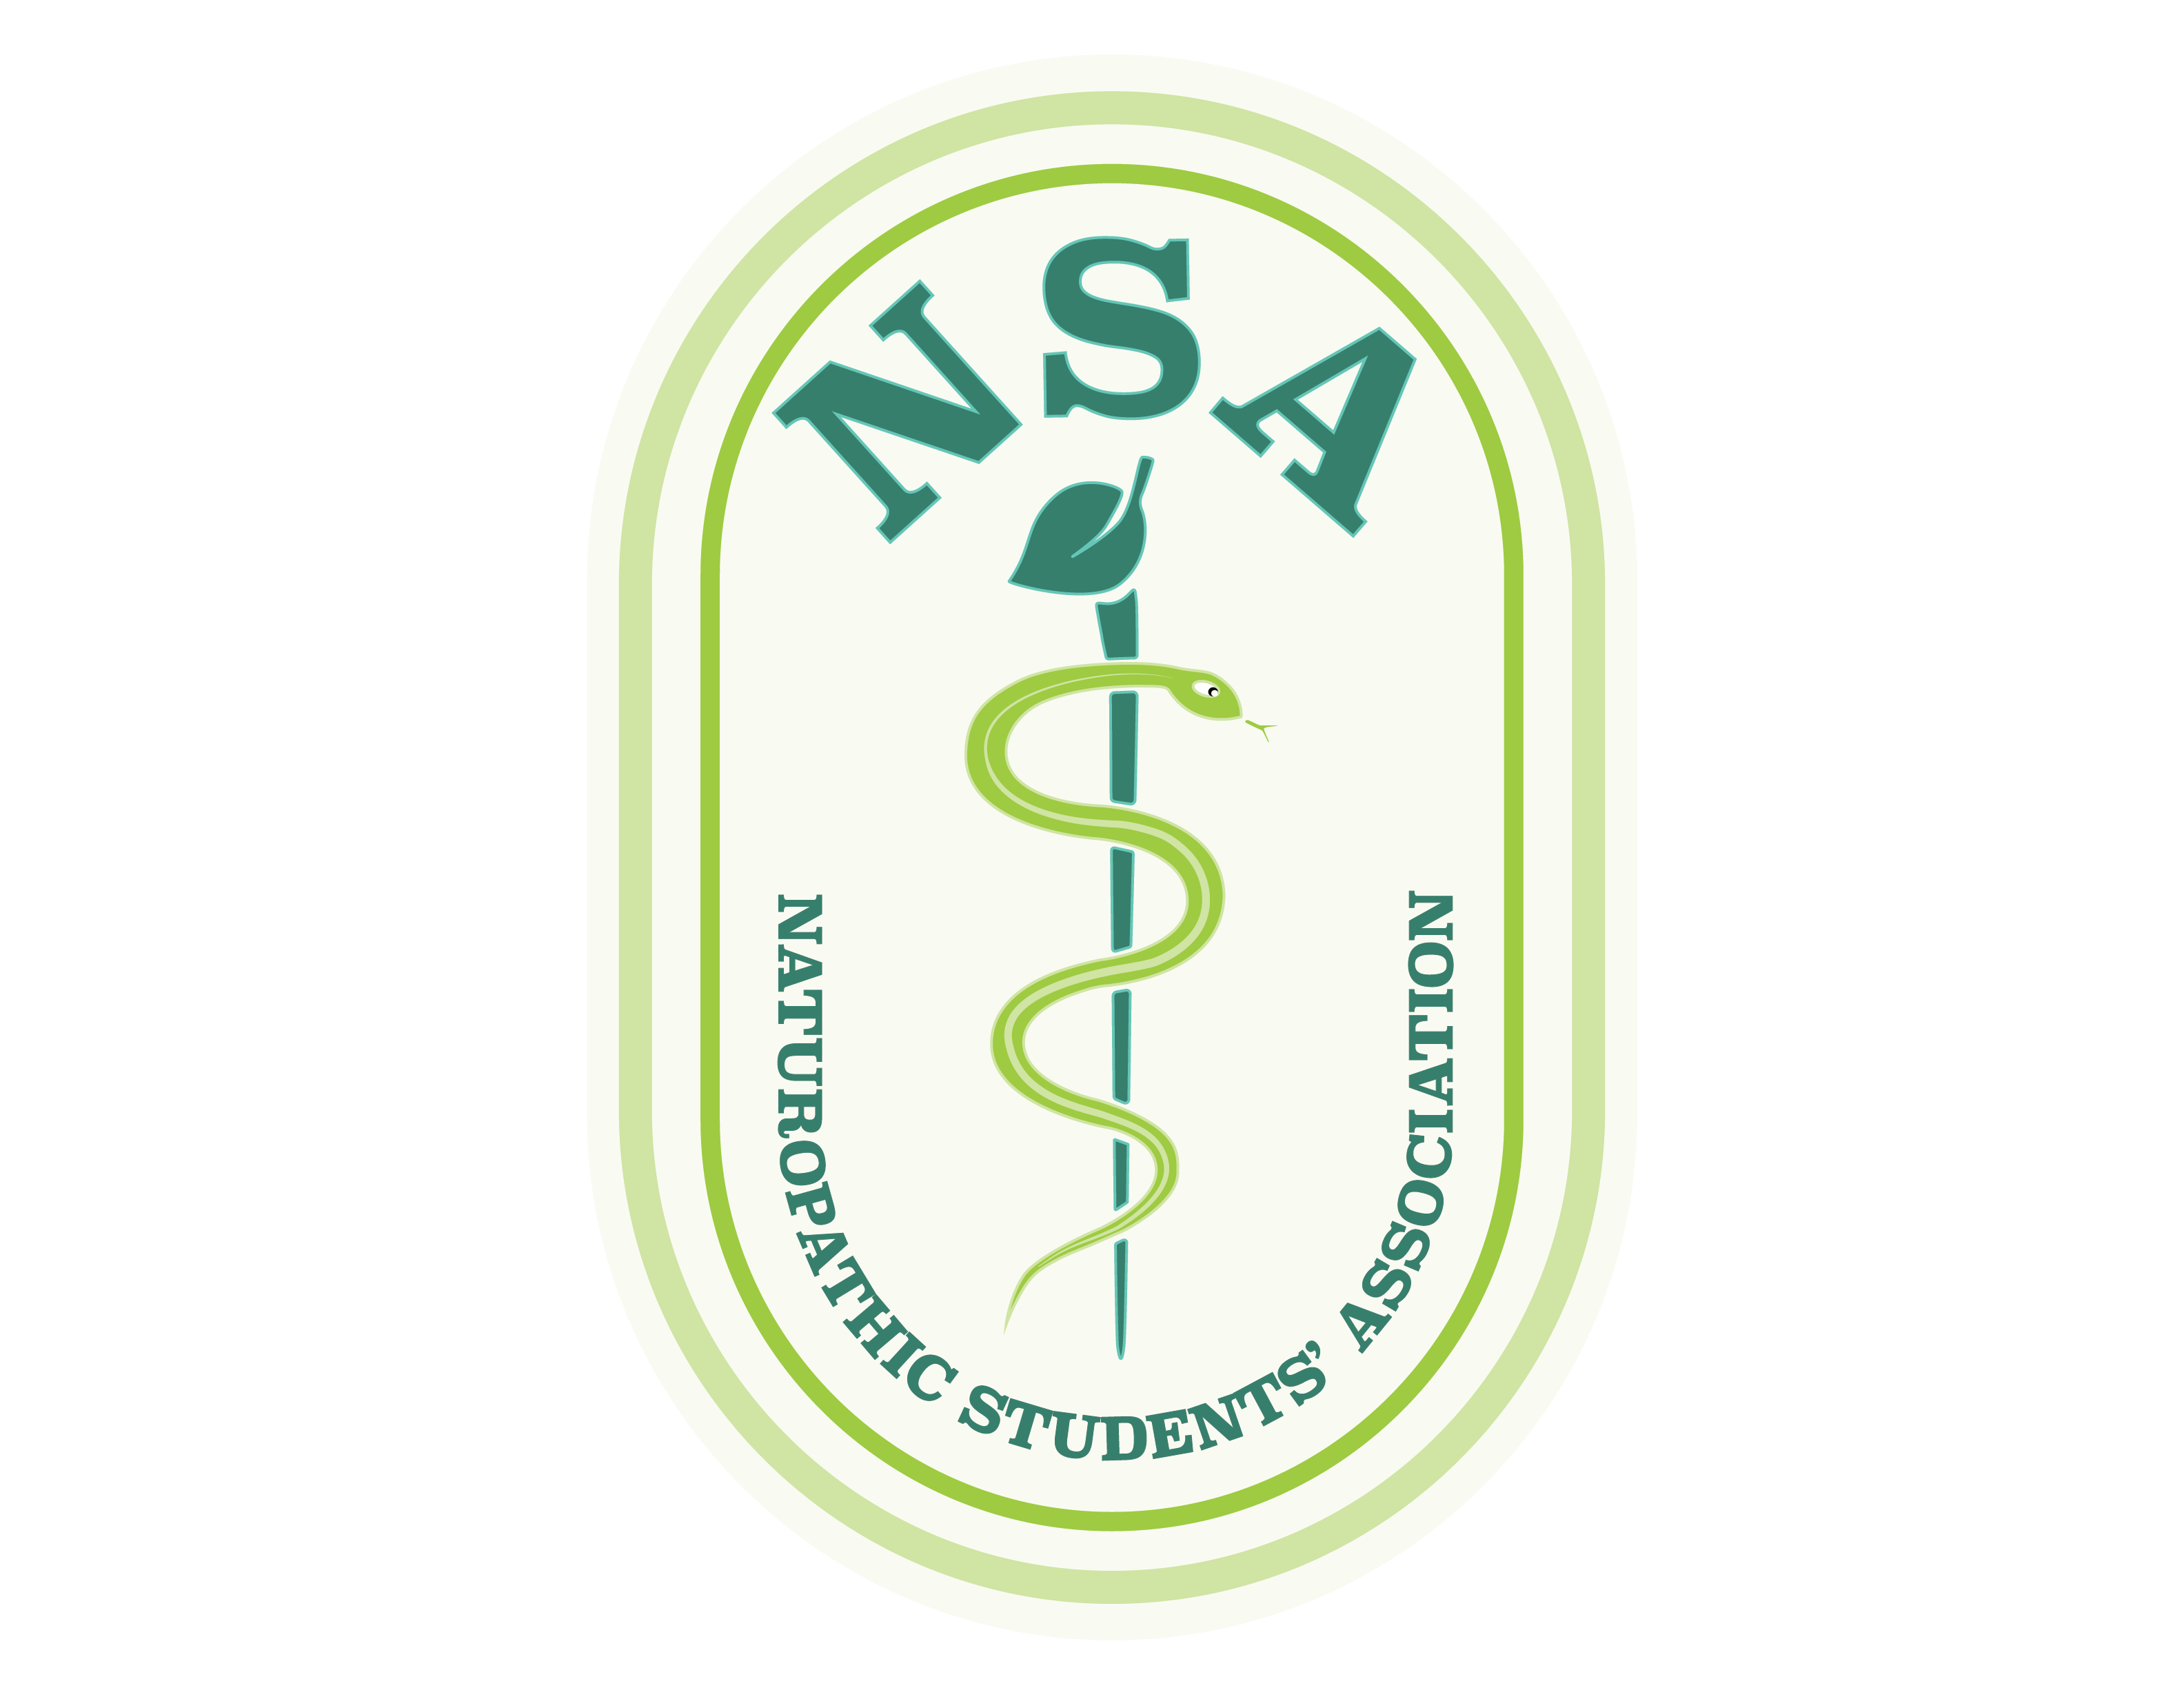 Naturopathic Students' Association logo